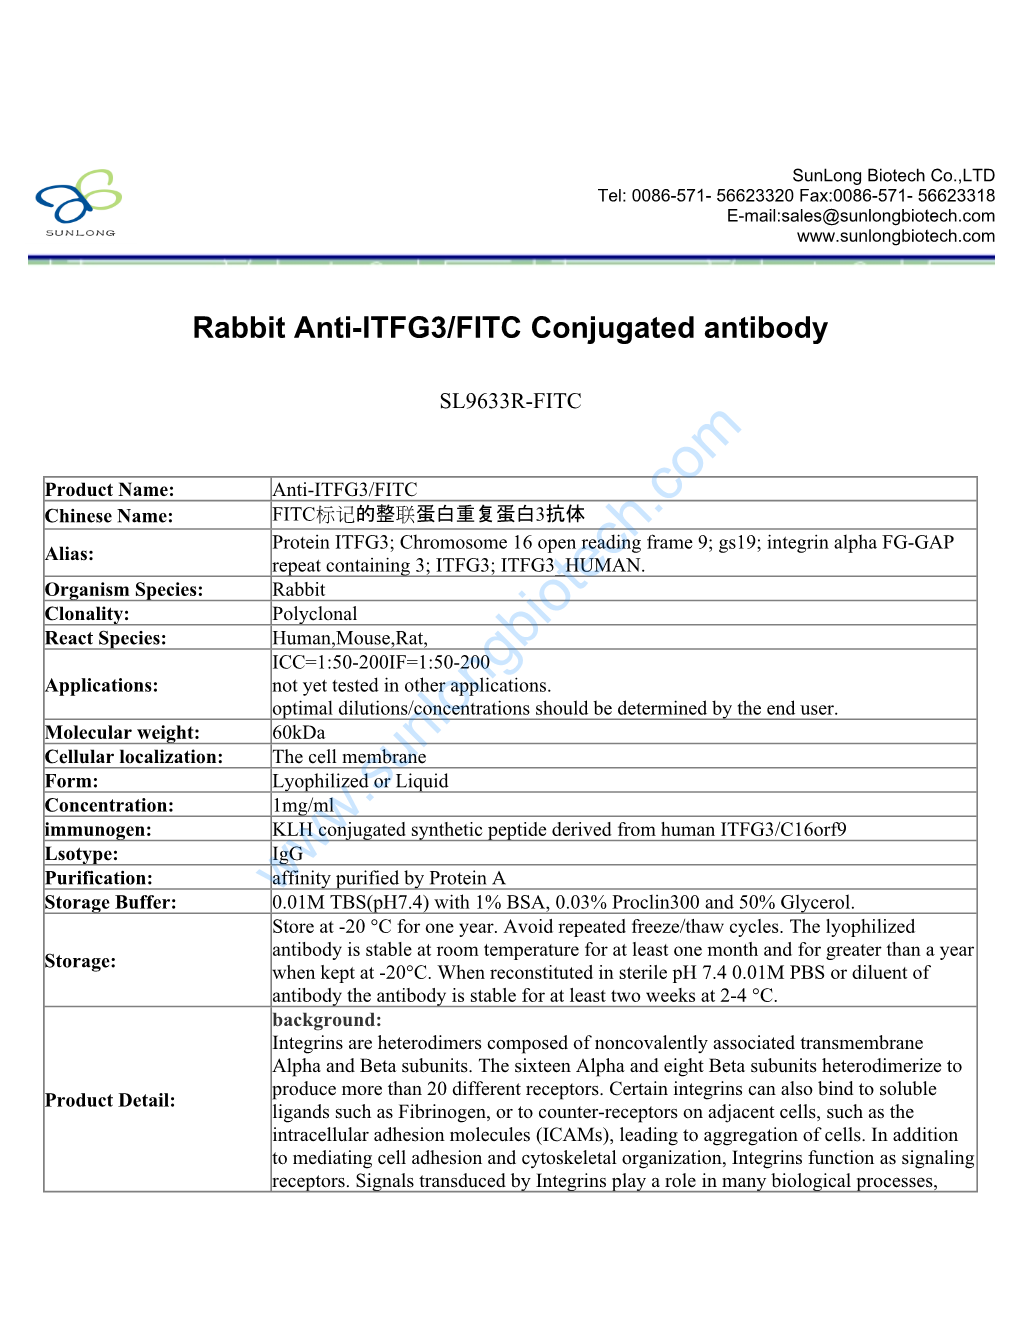 Rabbit Anti-ITFG3/FITC Conjugated Antibody